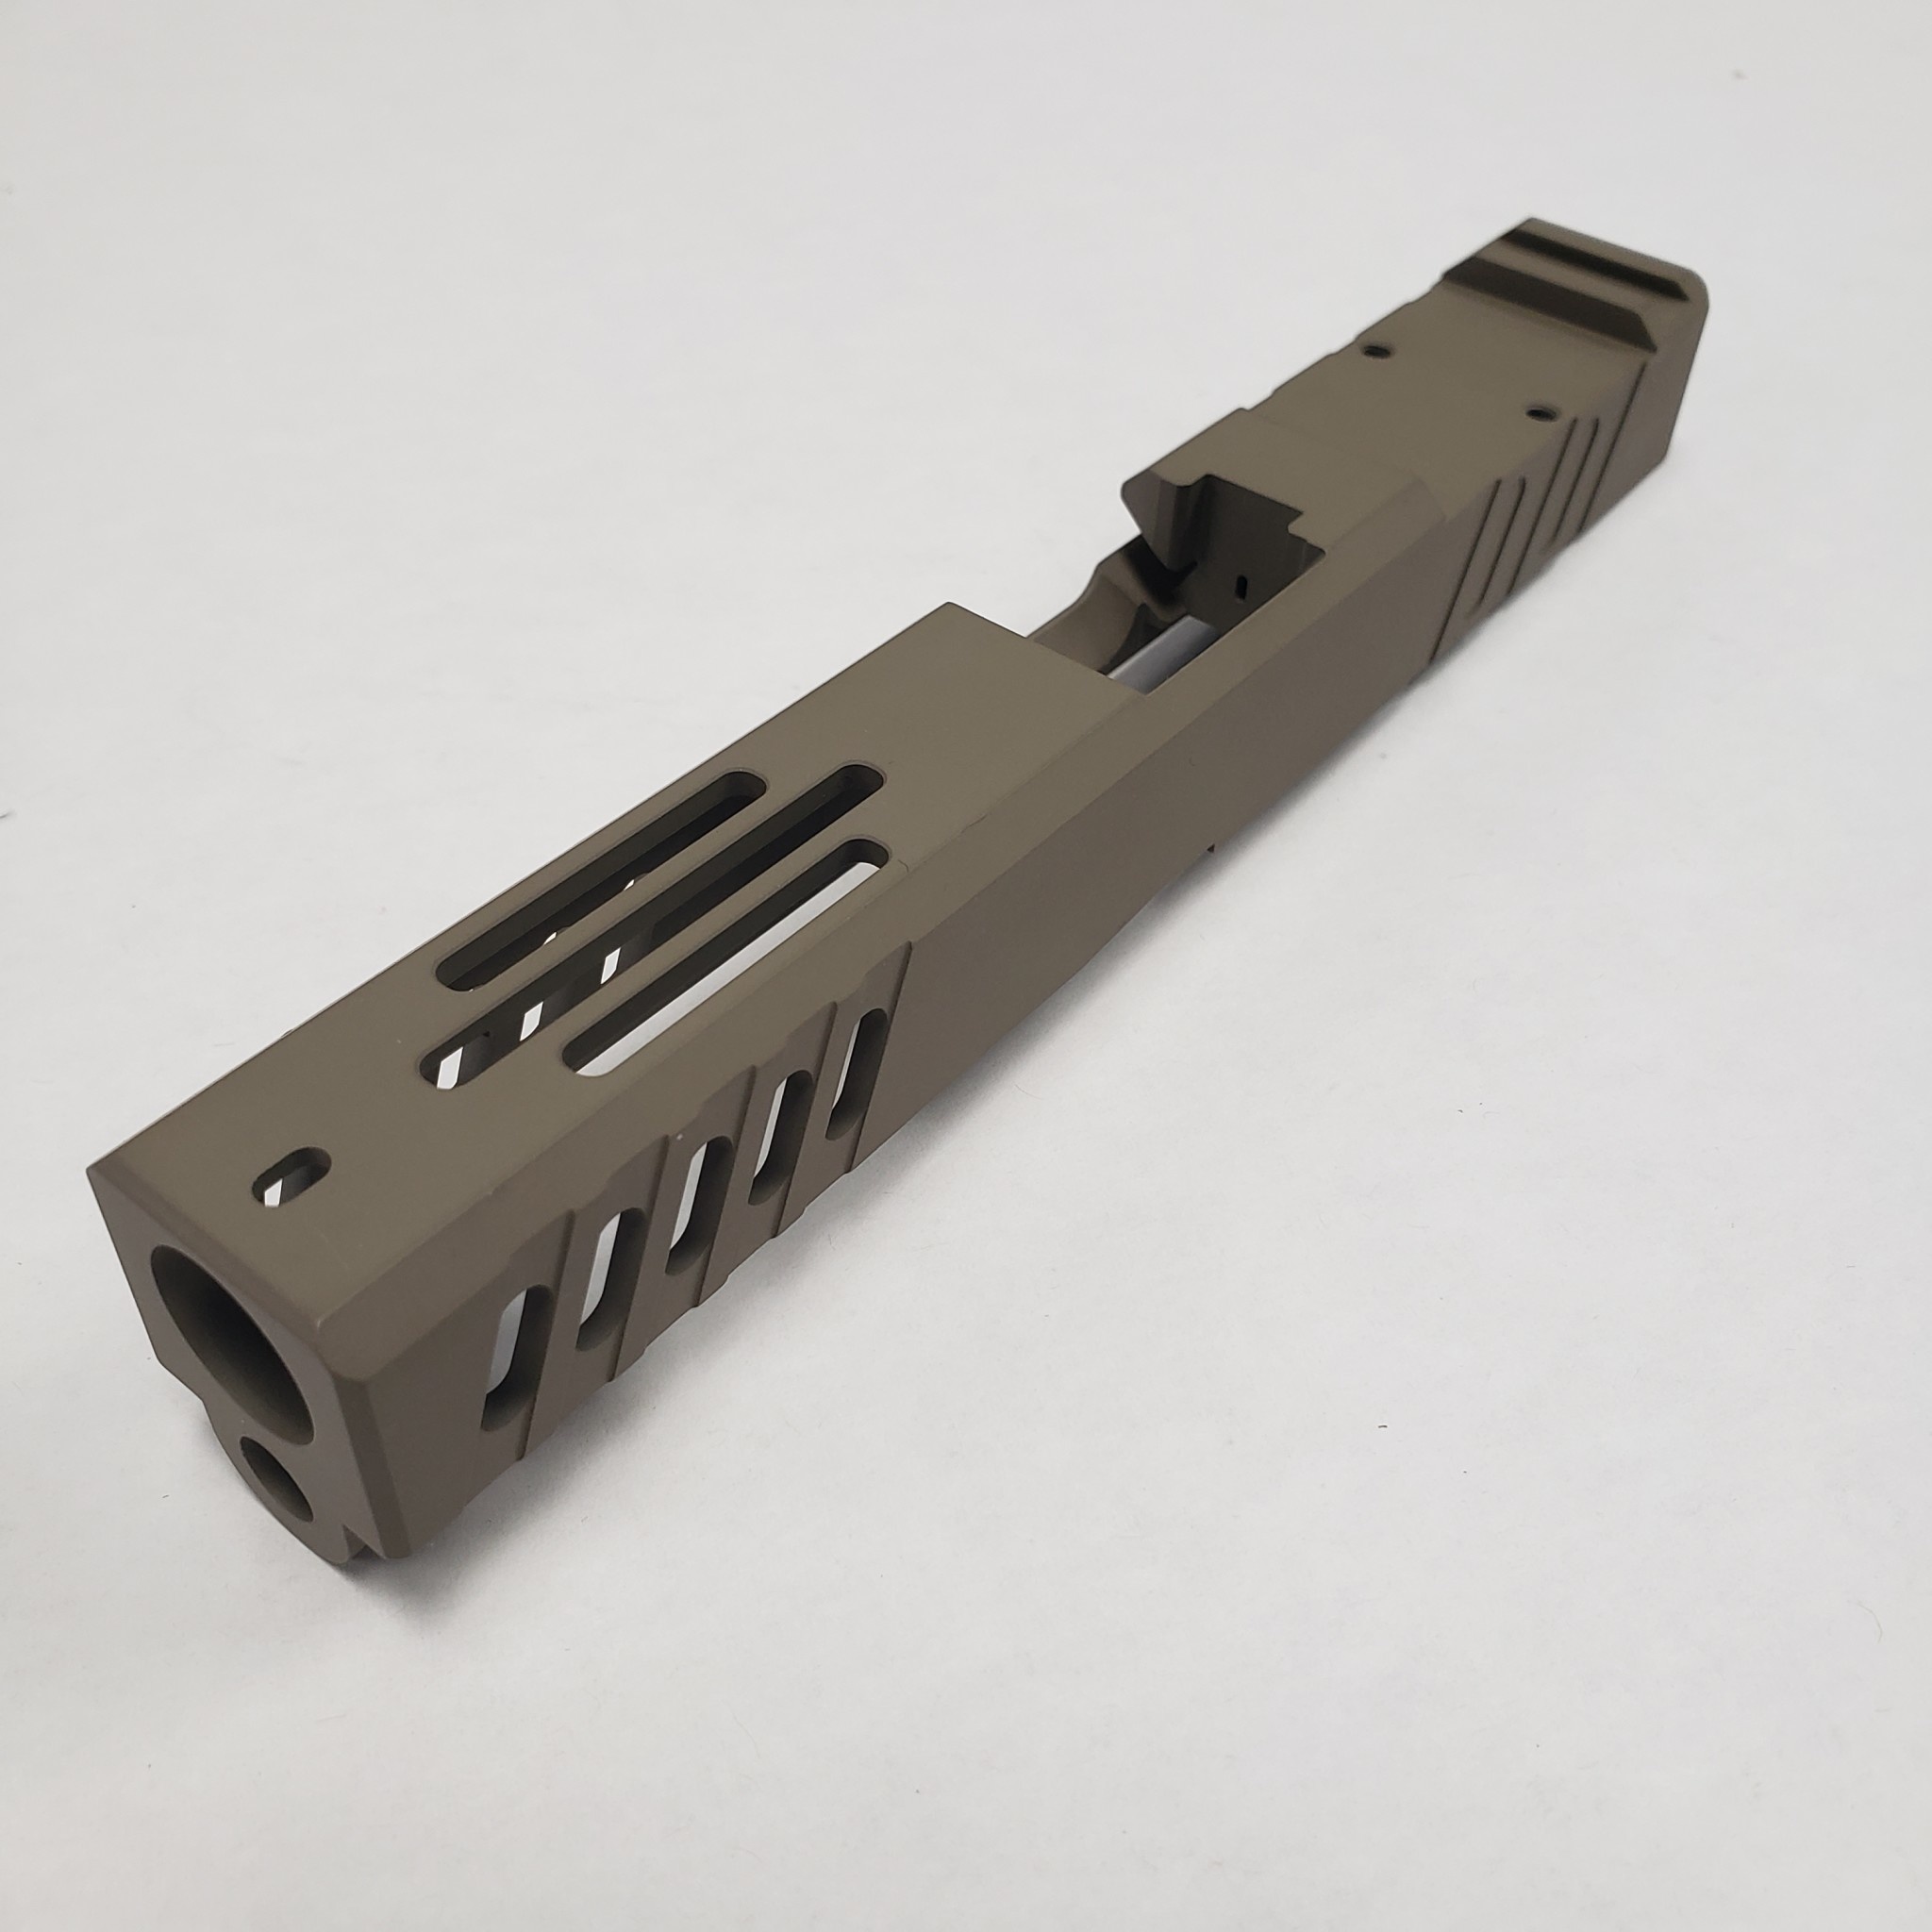 FU Glock Compatible Slide T2 Stripped G17 9mm